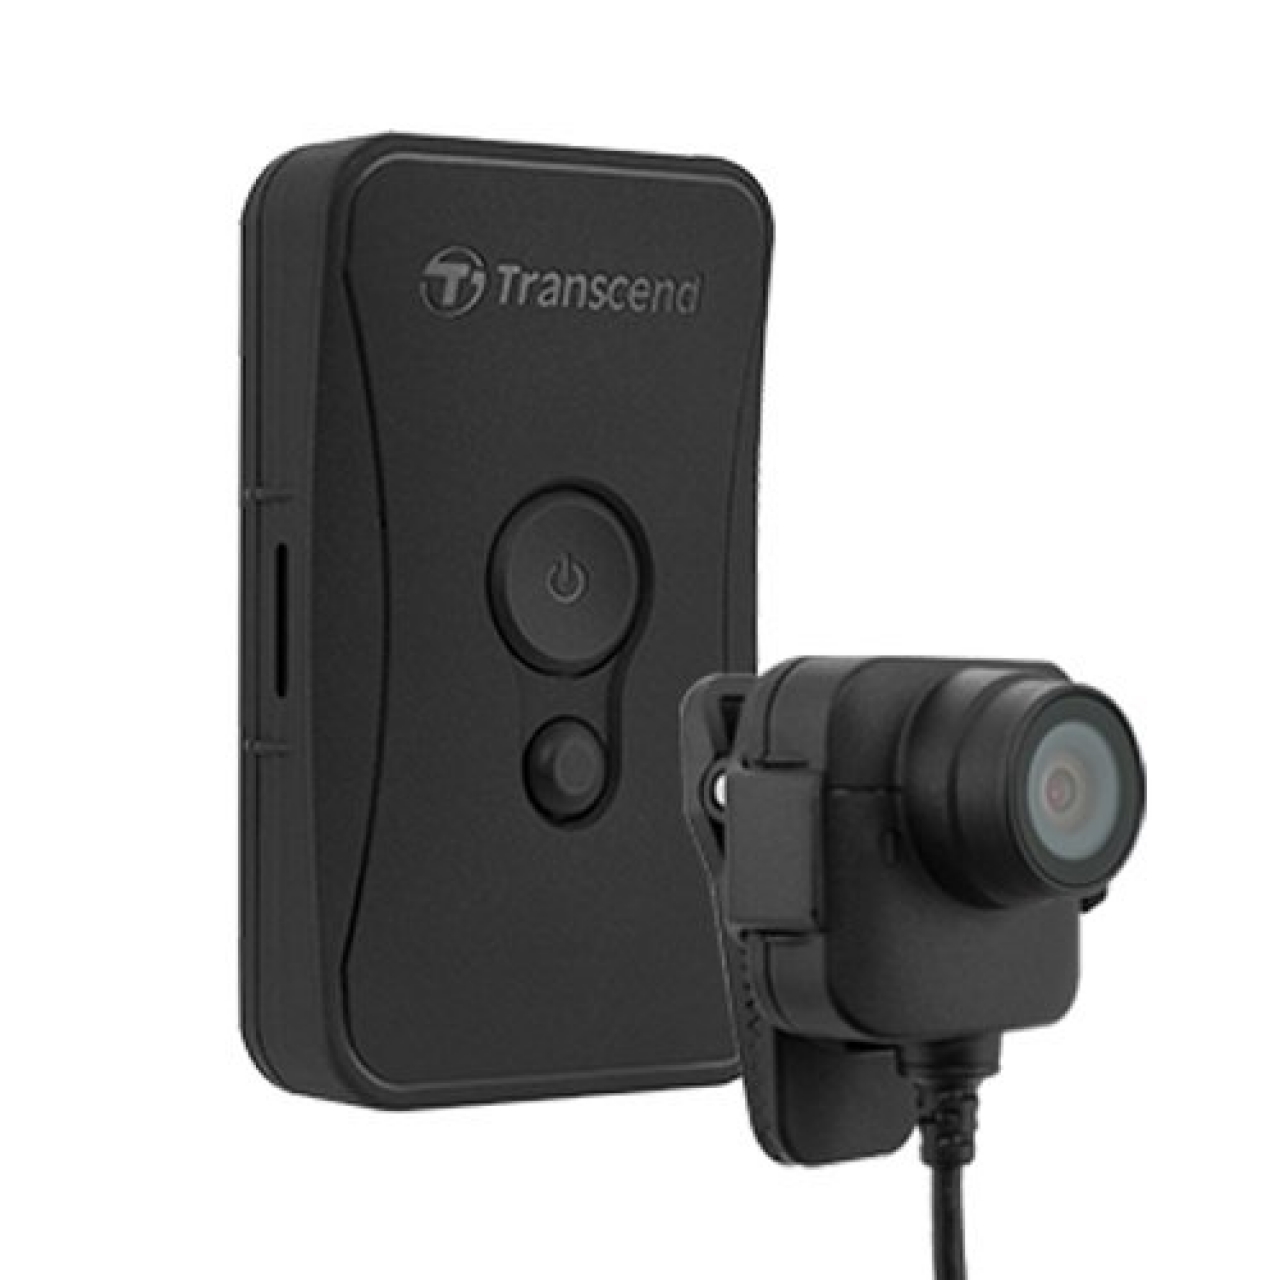 TRANSCEND DrivePro 52 Güvenlik Yaka Kamerası 1080P (Polis,Askeri,vb Kullanım İçin) TS32GDPB52A